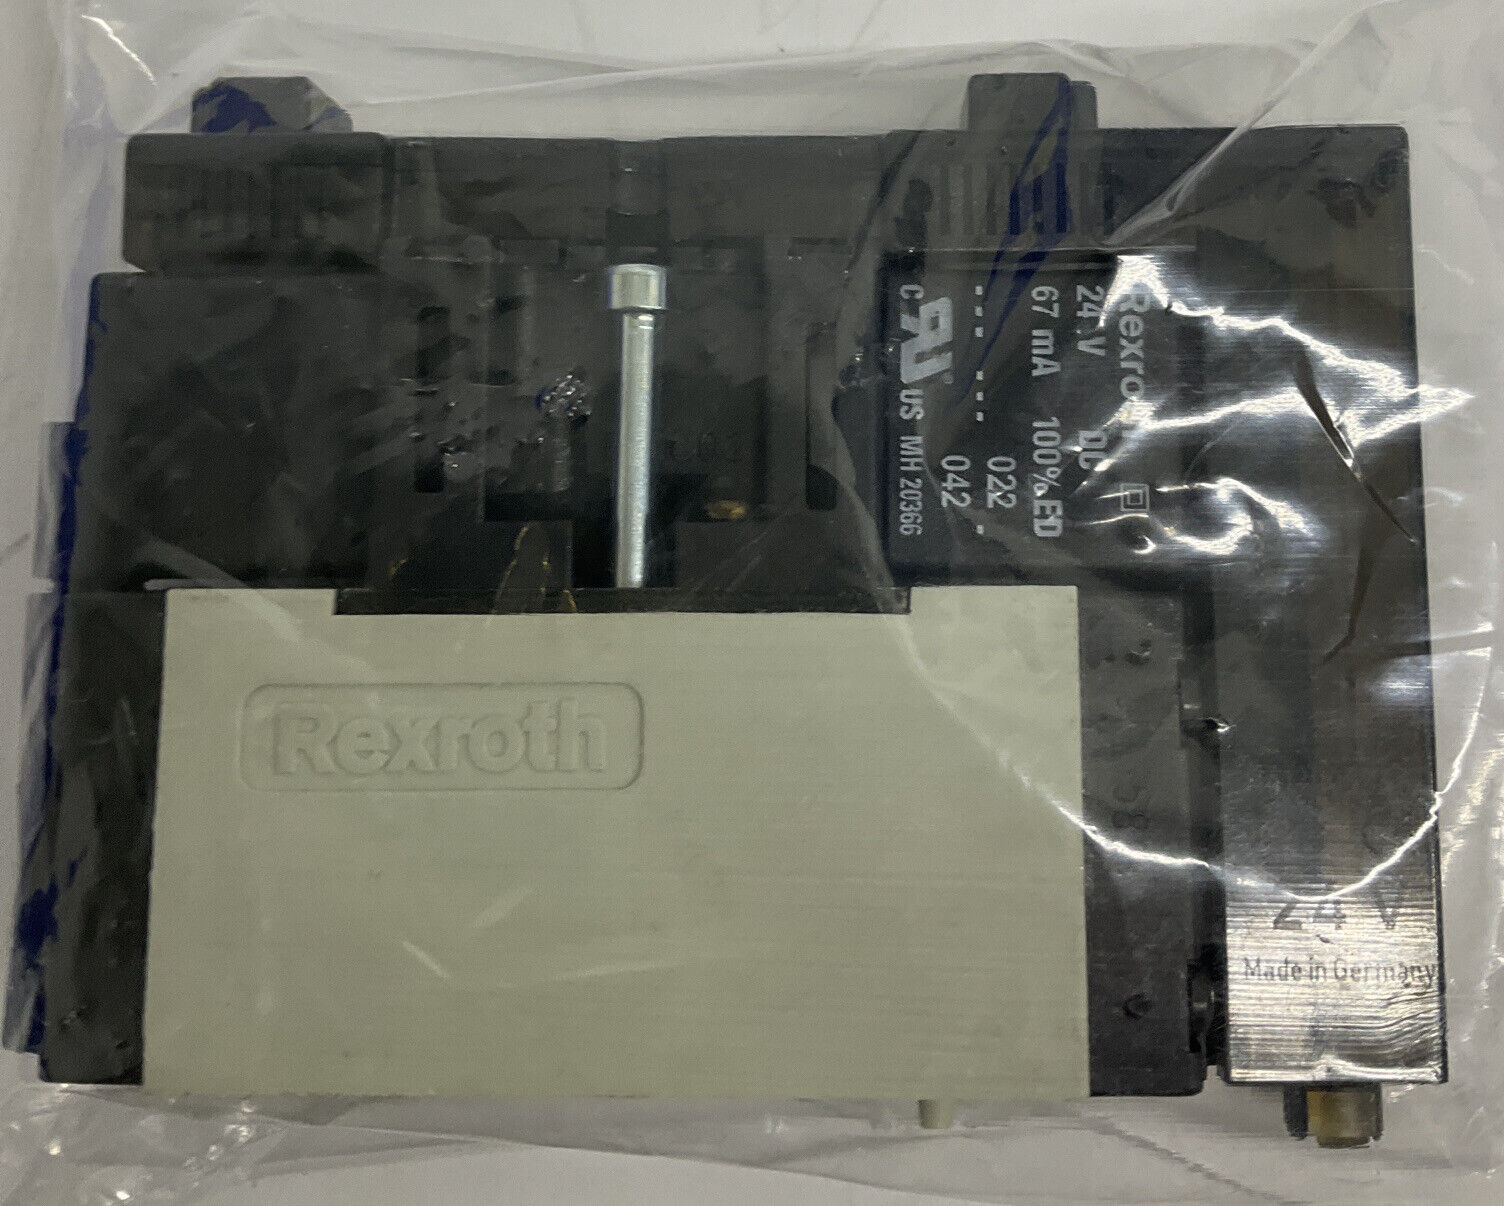 Rexroth CD26-PL 5763970120 New Pneumatic Solenoid Valve (BL155)